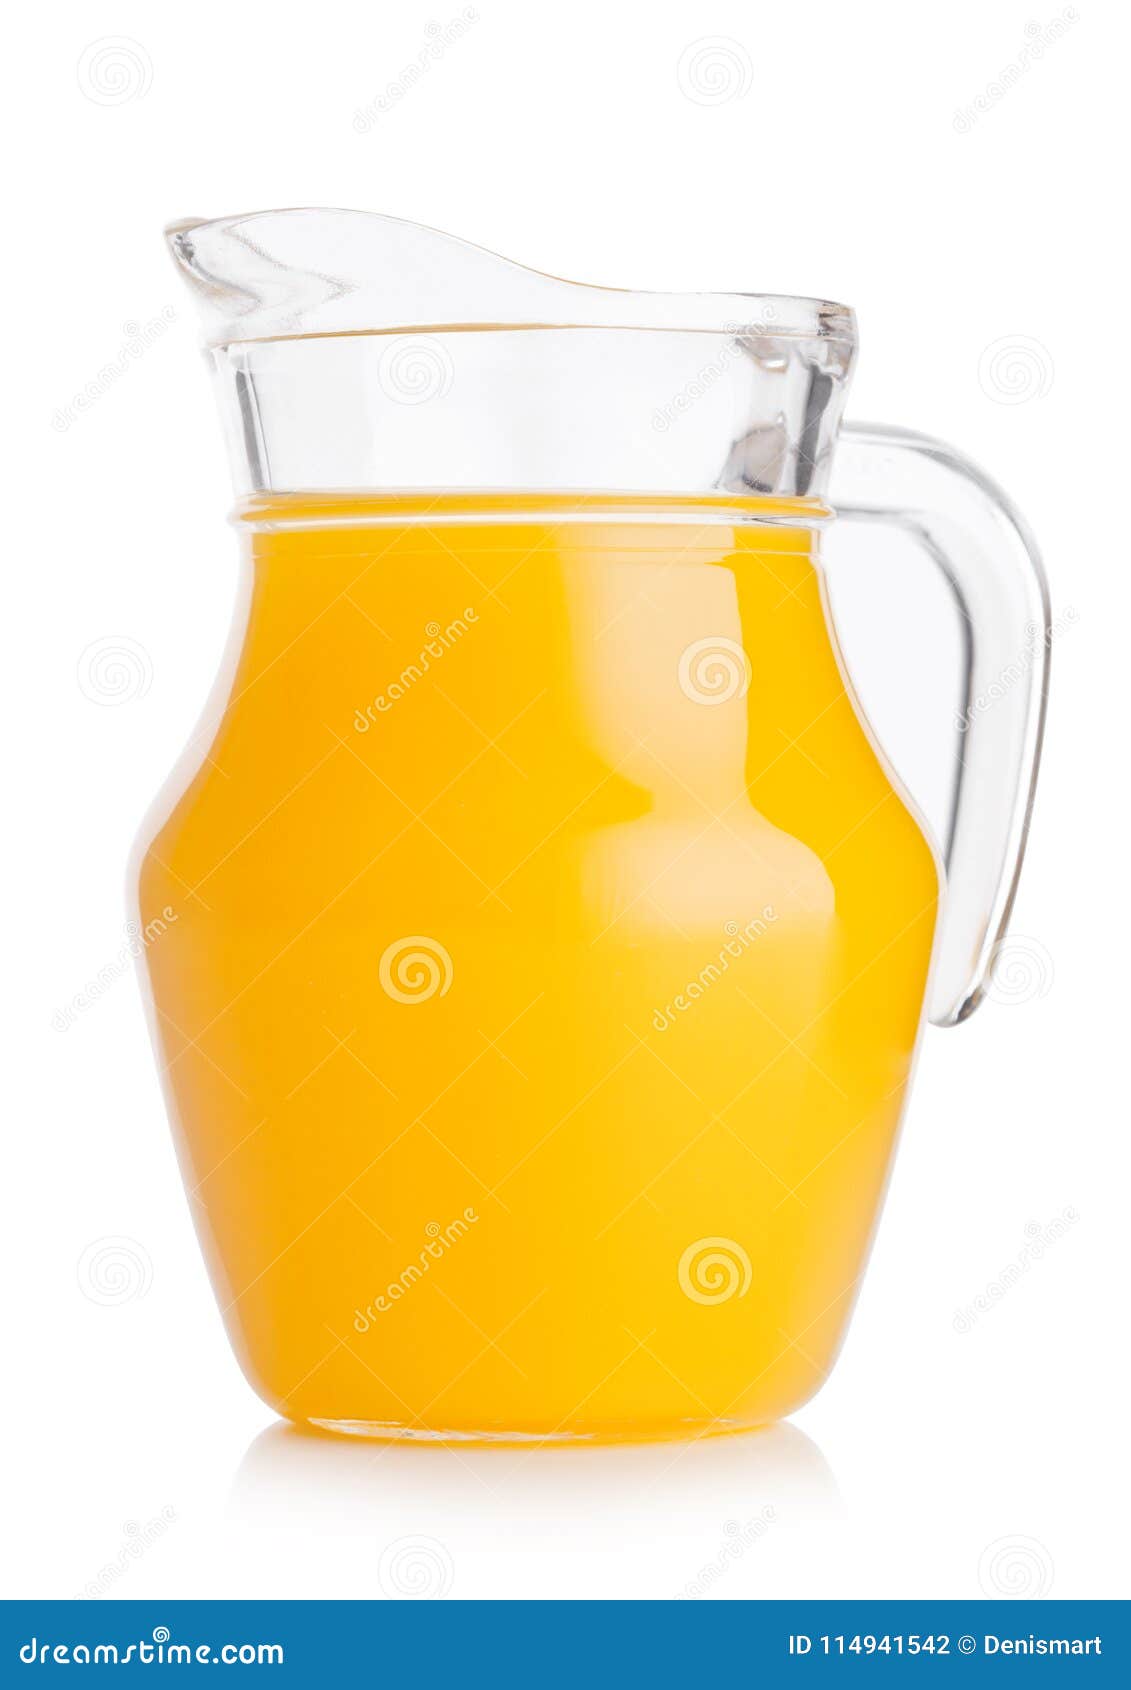 https://thumbs.dreamstime.com/z/glass-jar-fresh-orange-juice-fruits-organic-smoothie-reflection-white-background-114941542.jpg